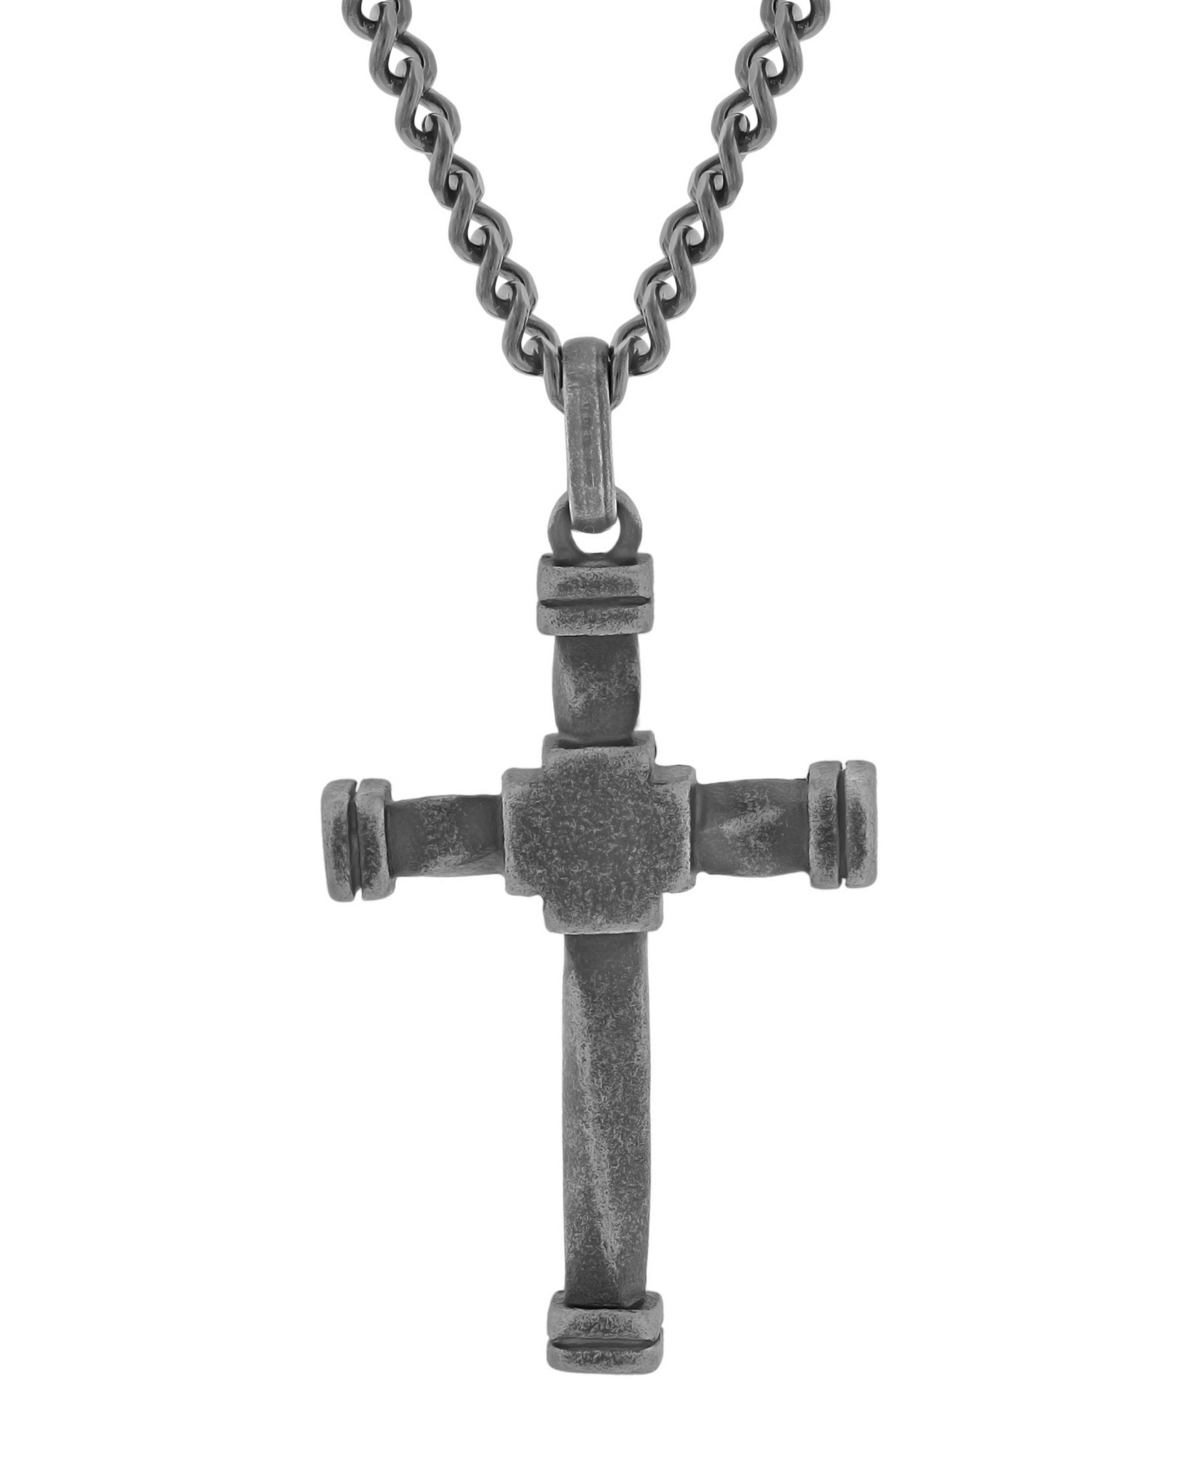 C & c Jewelry Macy's Men's Classic Cross Pendant Necklace in Gunmetal Stainless Steel